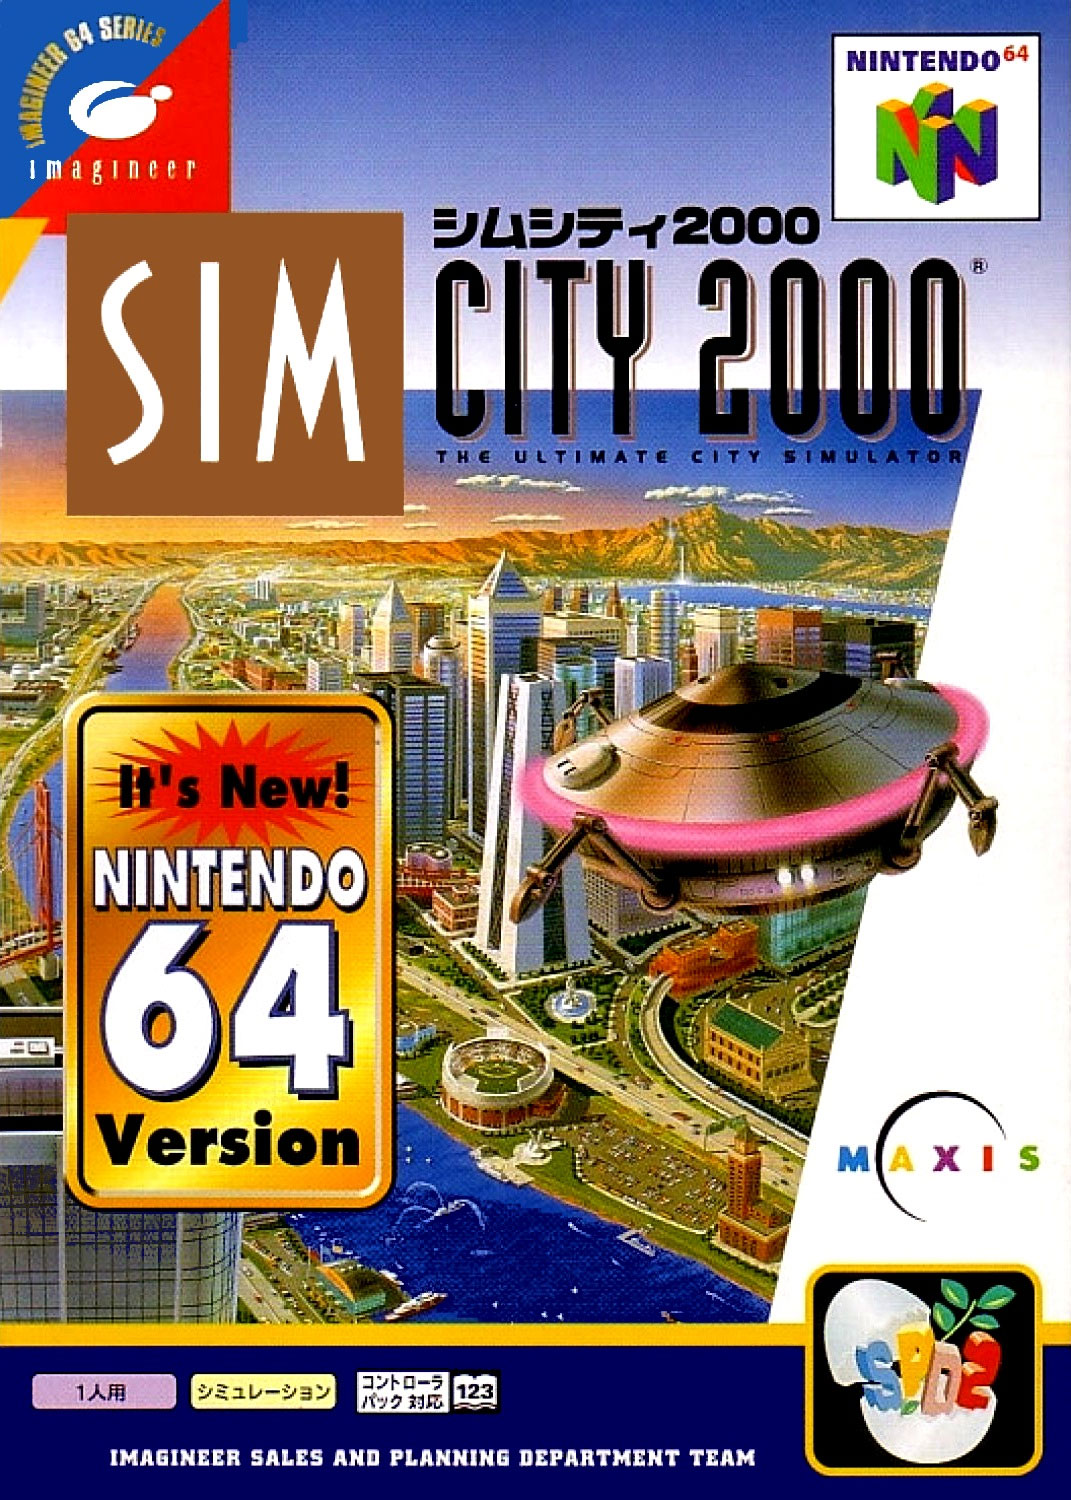 simcity2000-box-l.jpg